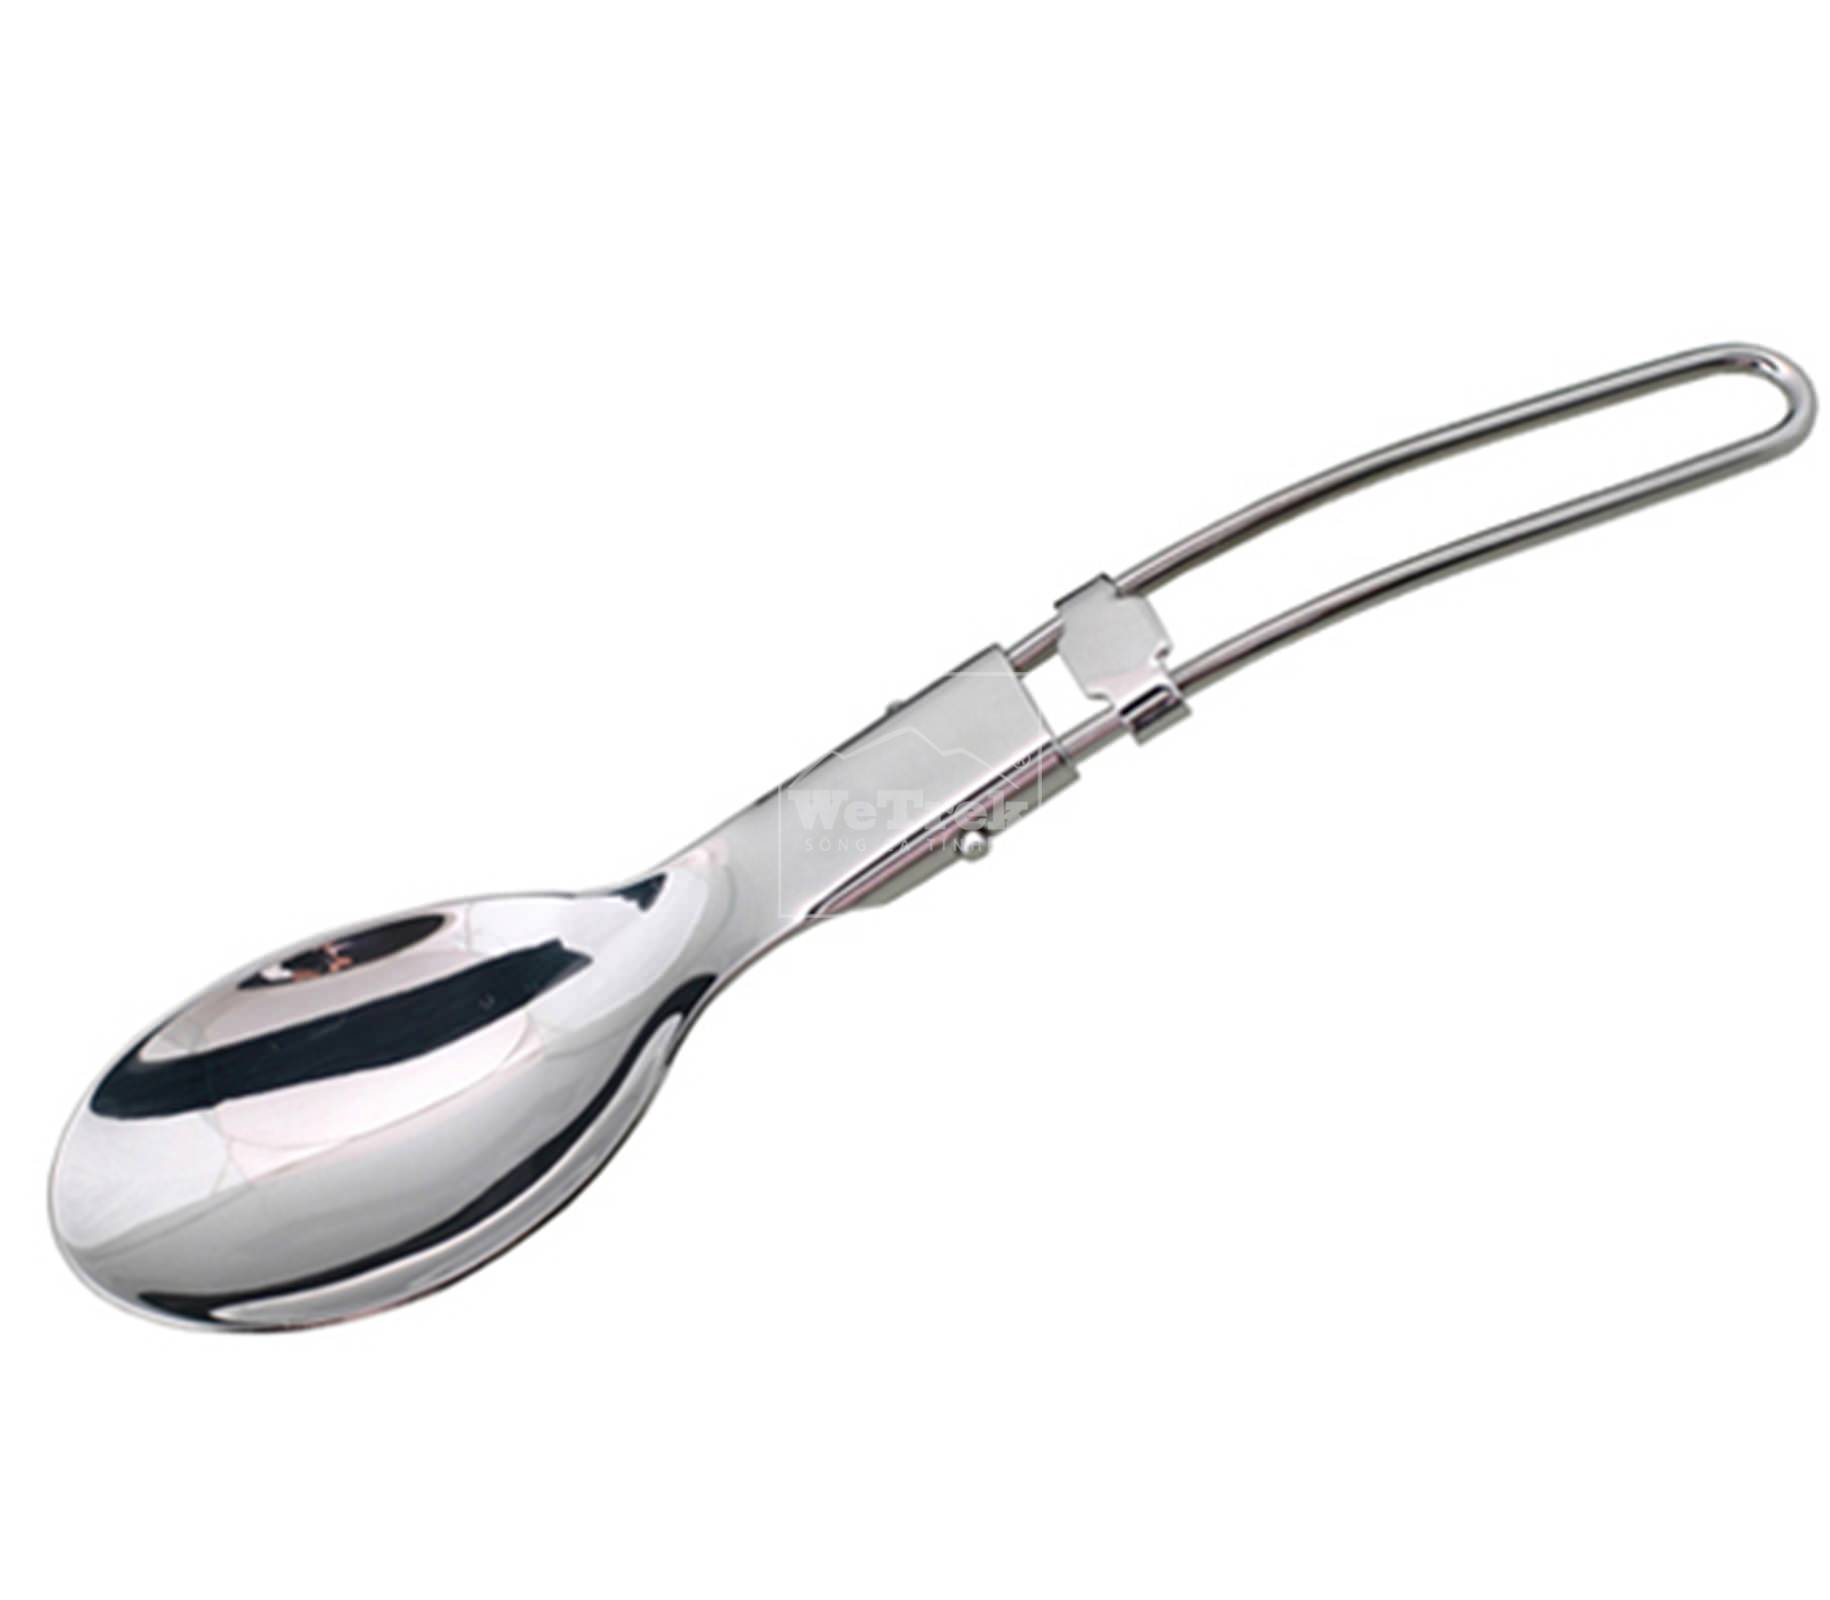 thia-gap-ryder-folding-spoon-m1017-6779-wetrek_vn